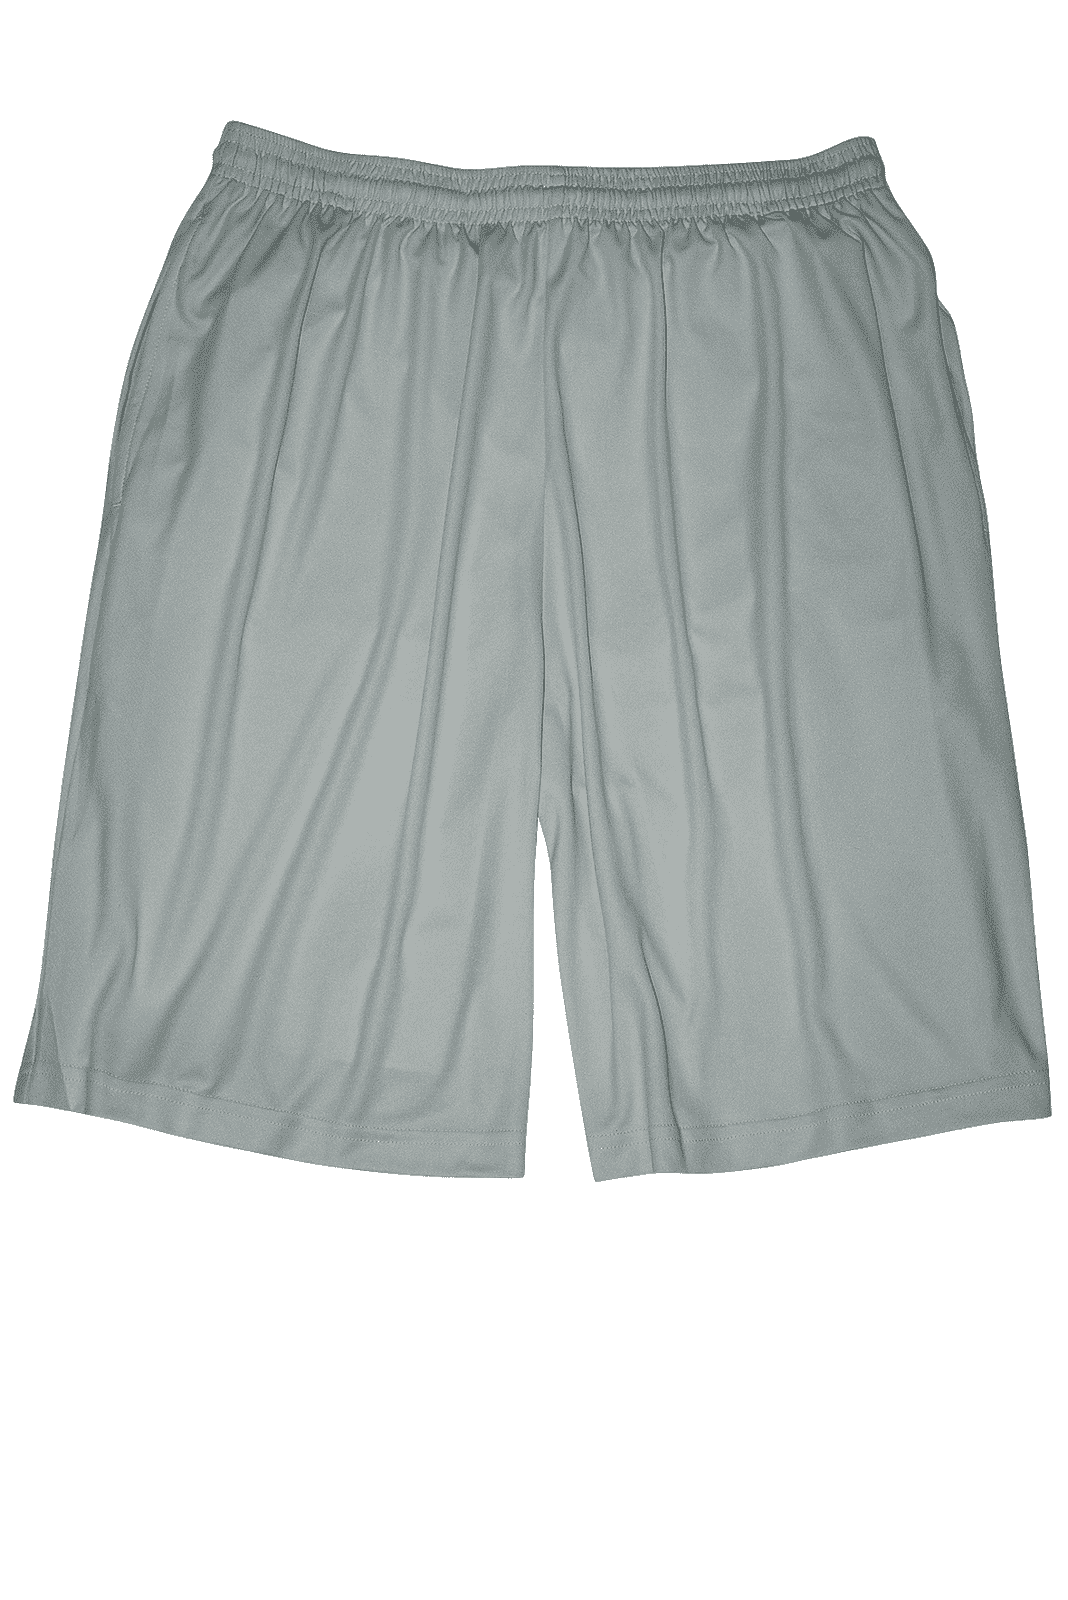 Paragon 600 Aussie Shorts - Medium Gray - HIT a Double